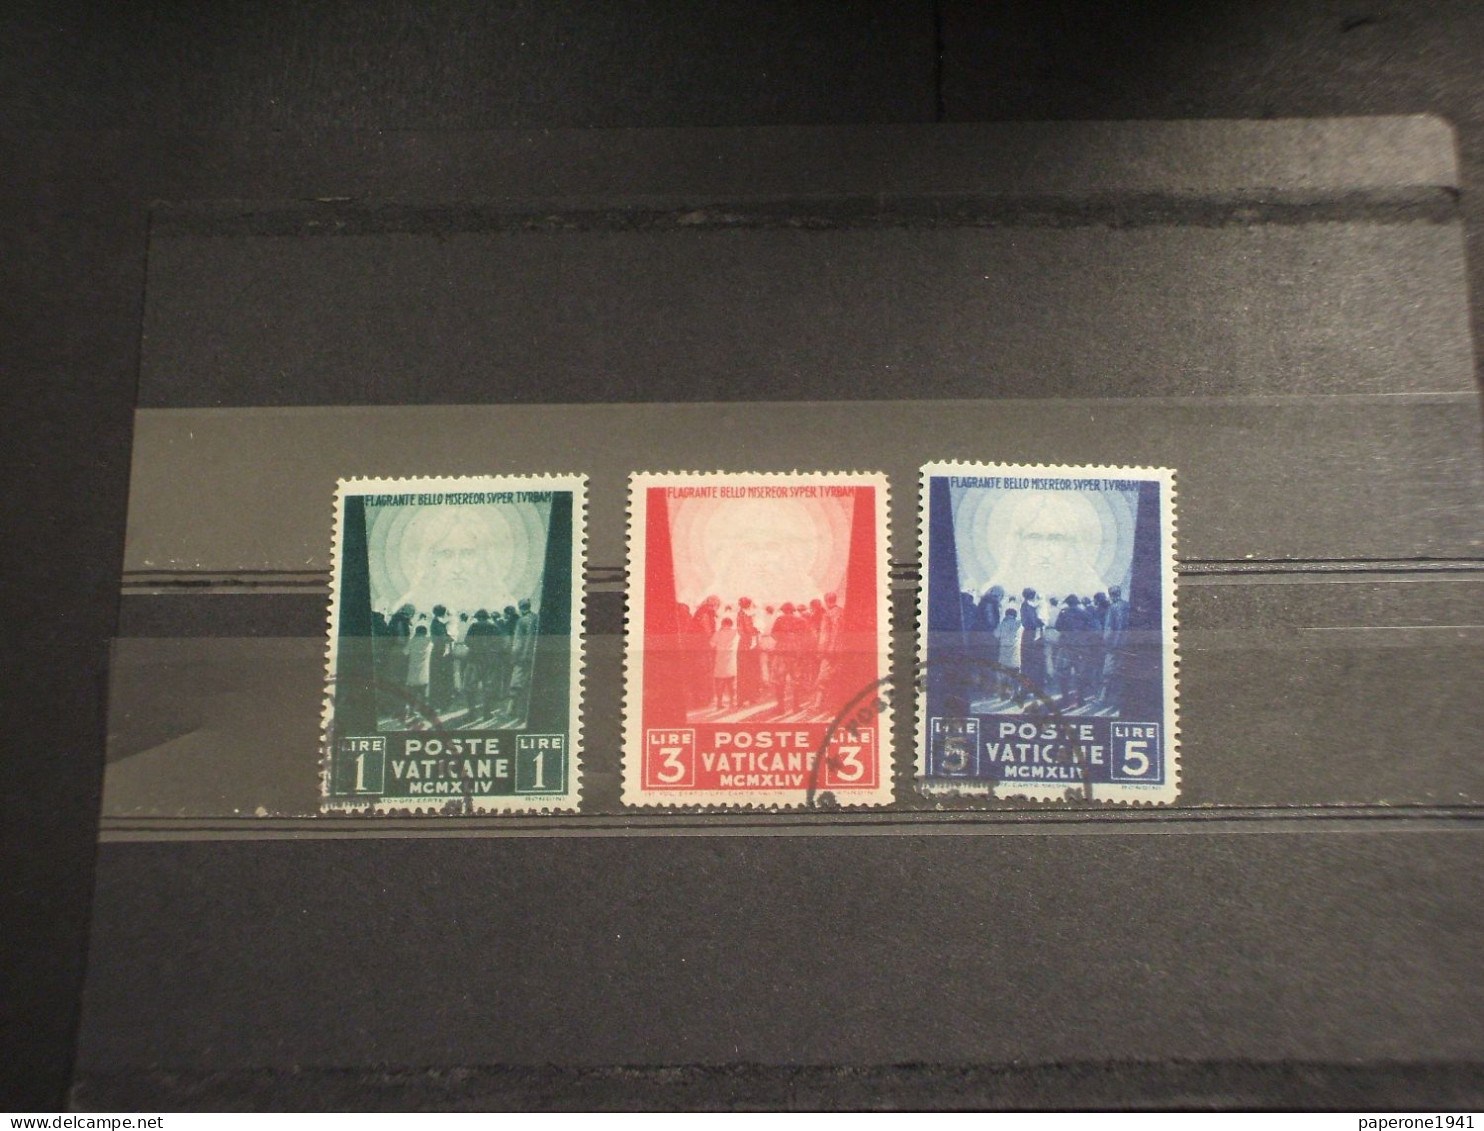 VATICANO - 1945 PRO PRIGIONIERI 3 VALORI - TIMBRATI/USED - Used Stamps